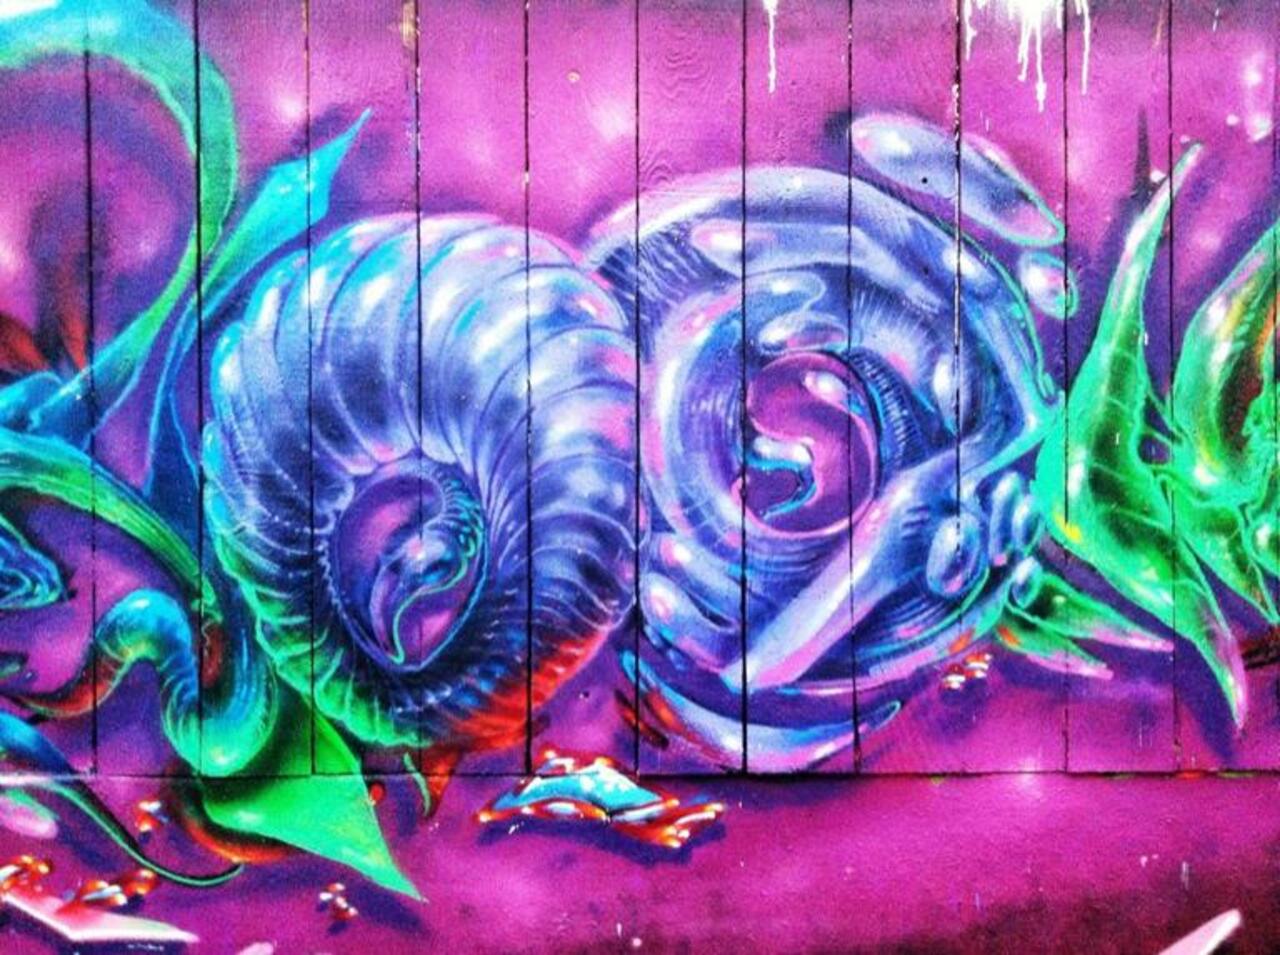 RT @billlambertson: San Francisco, Ca/USA #streetart #graffiti http://t.co/cO2hdf3uvK